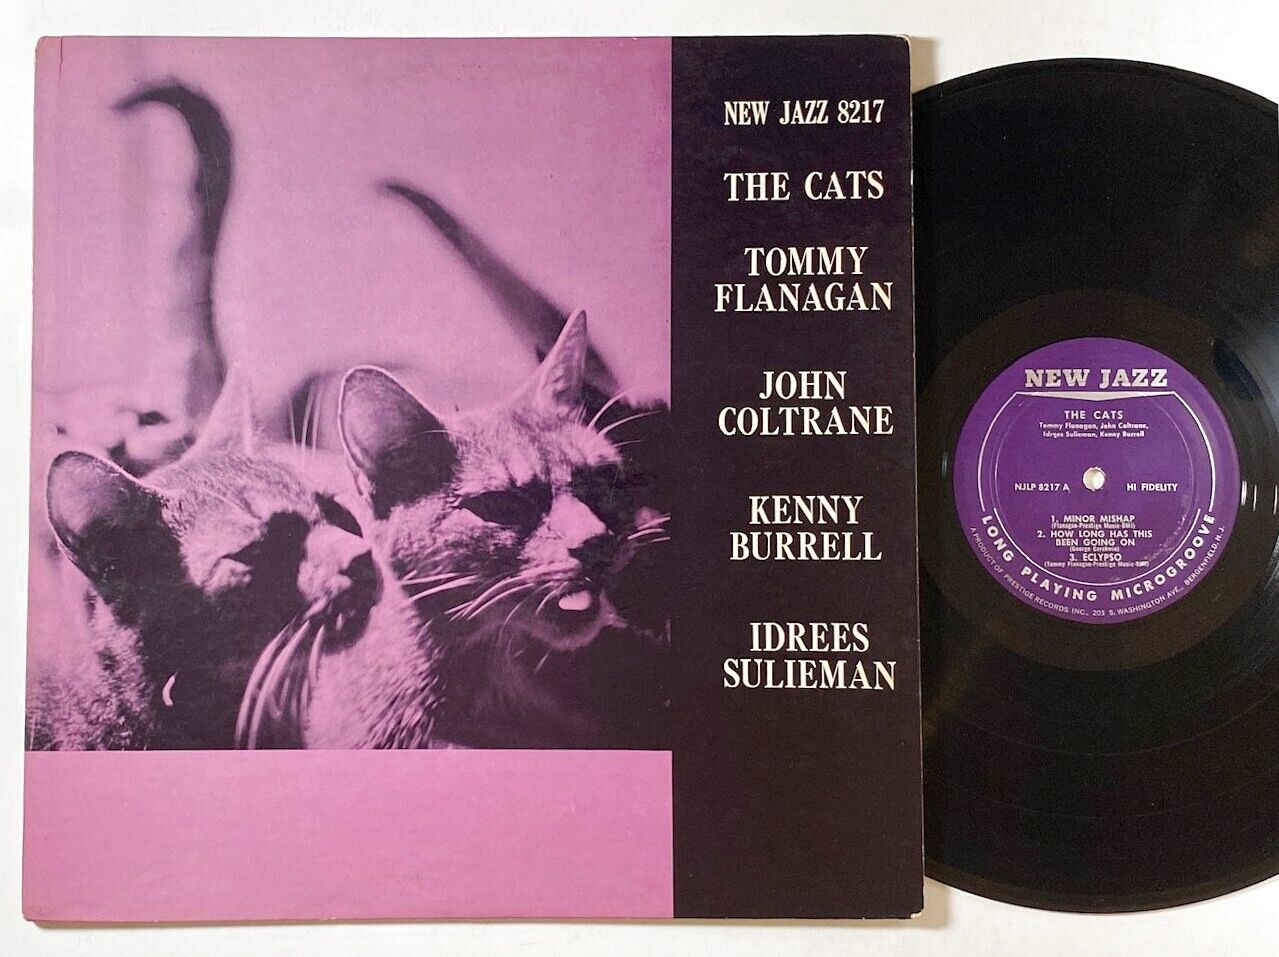 Tommy Flanagan Ft  John Coltrane  The Cats  Jazz LP New Jazz NJLP 8217 Mono DG